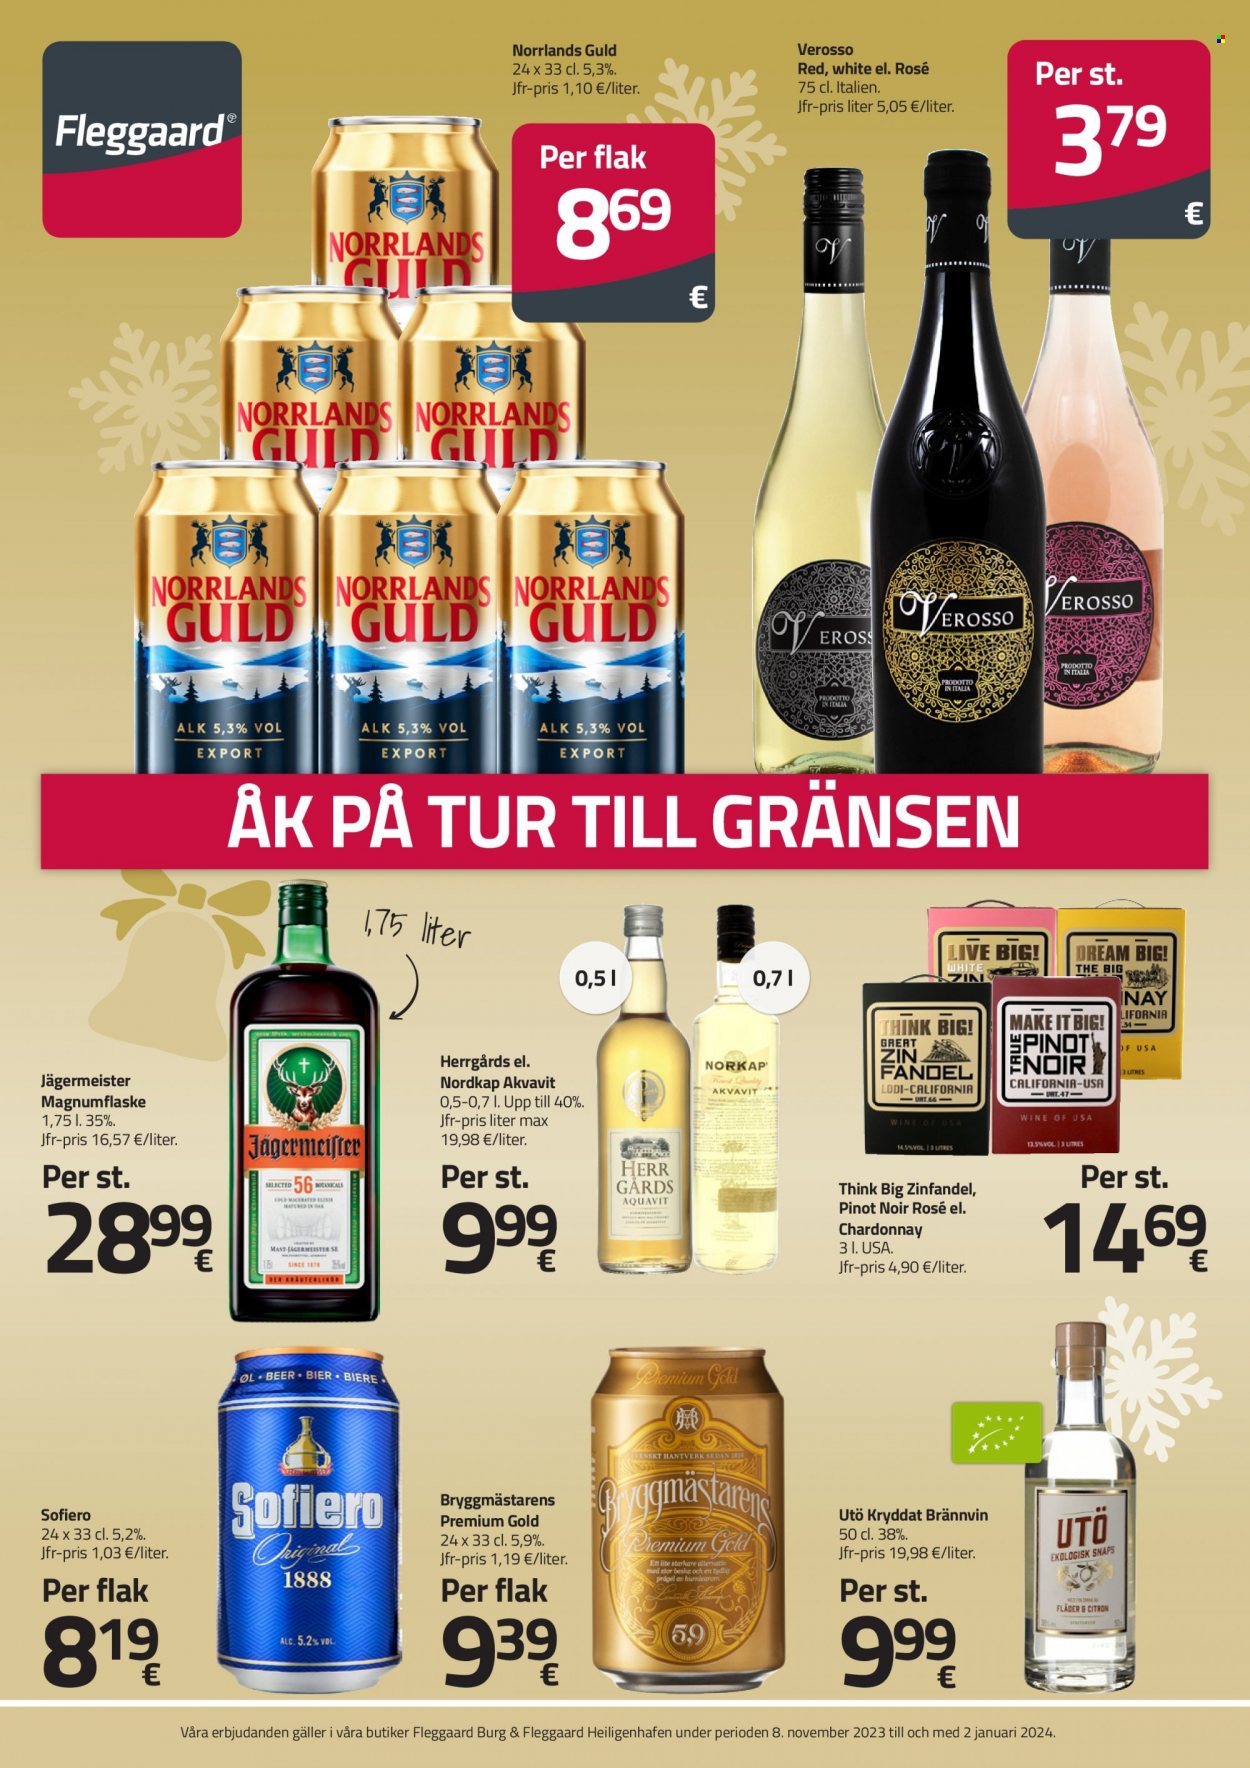 thumbnail - Fleggaard tilbud  - 8.11.2023 - 2.1.2024 - tilbudsprodukter - øl, akvavit, Jägermeister, Chardonnay, hvidvin, Pinot Noir, vin, Zinfandel. Side 1.